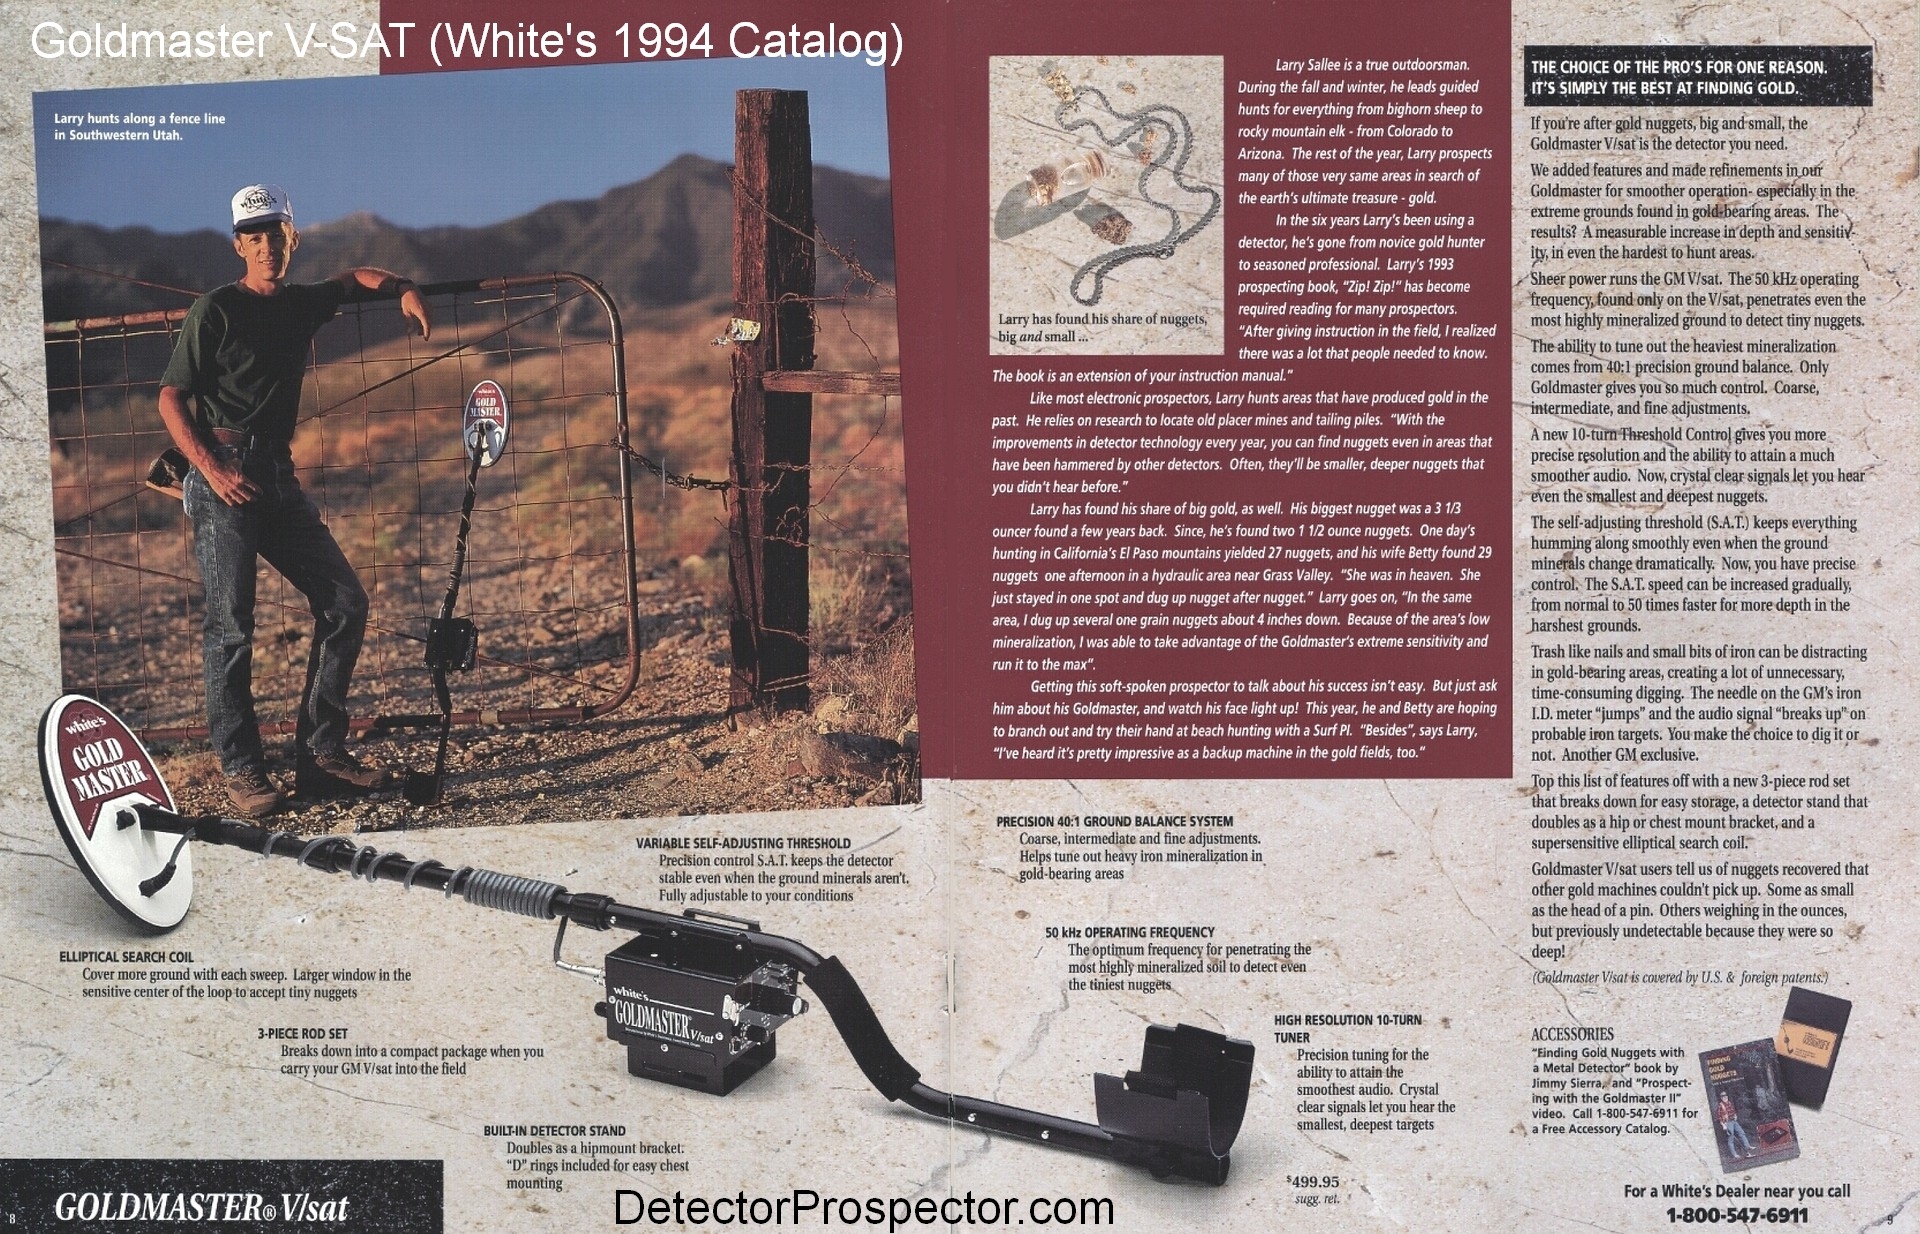 whites-goldmaster-v-sat-1994-catalog.jpg